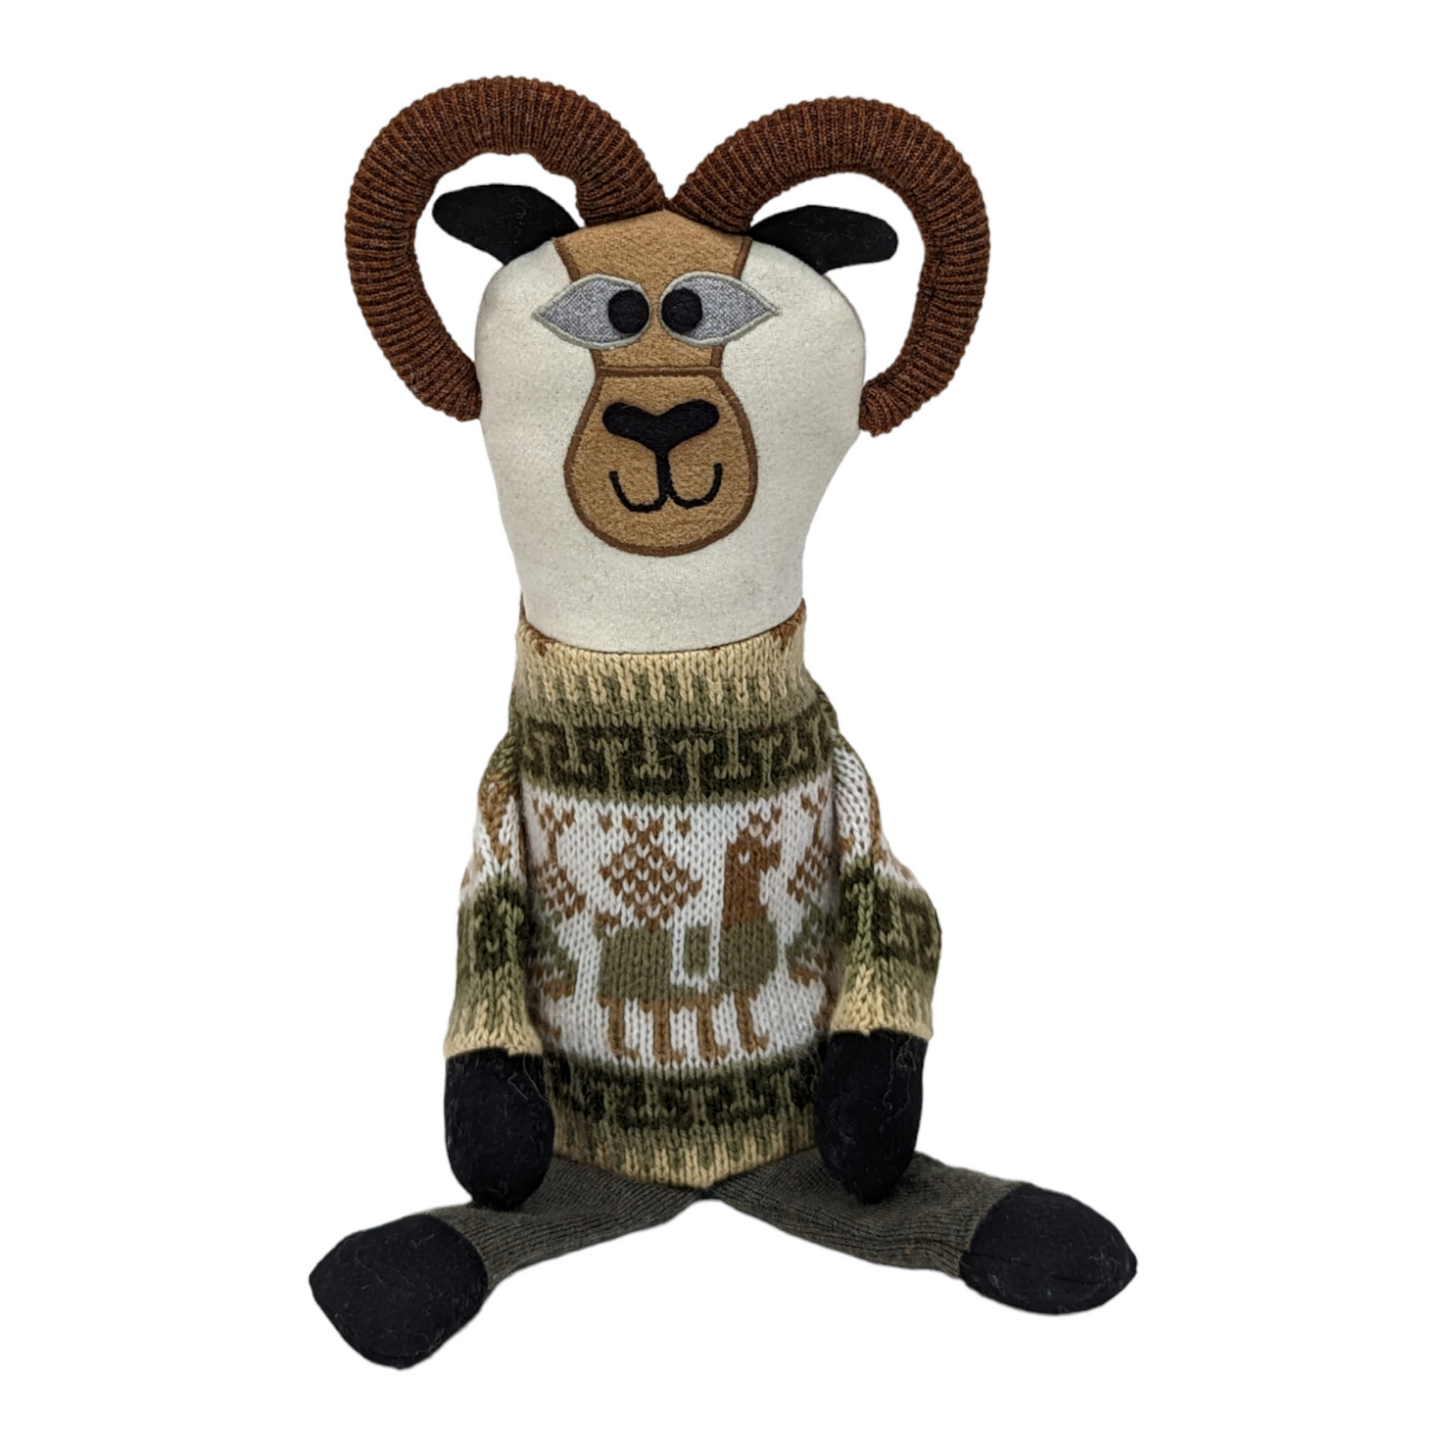 Sheep-Ram Stuffed Animal